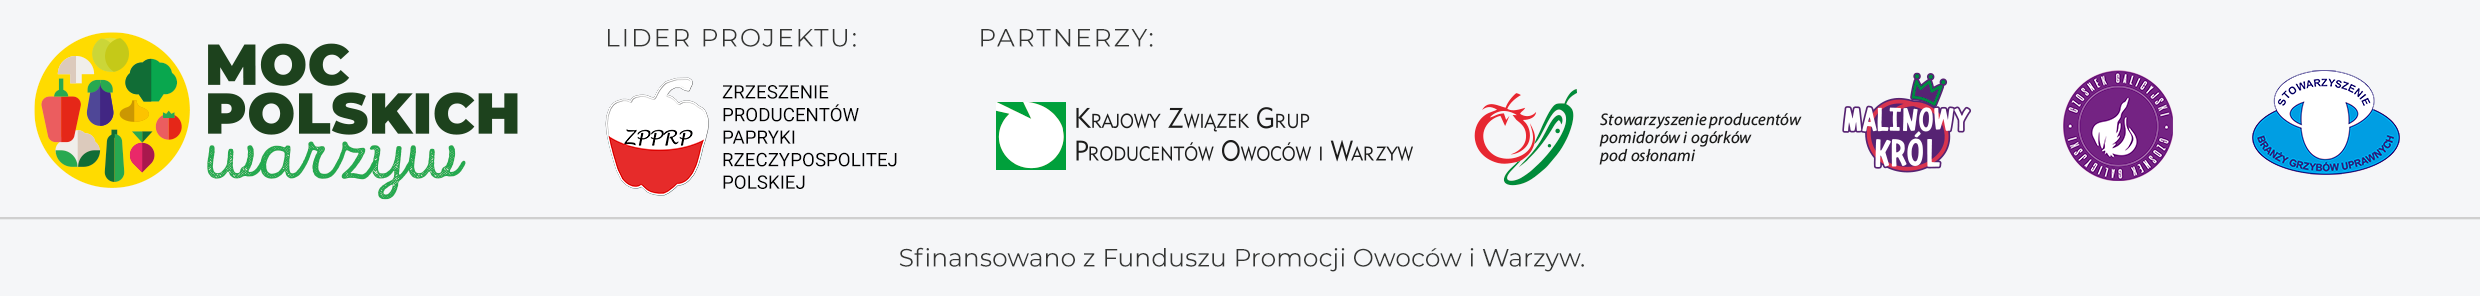 belka moc polskich warzyw